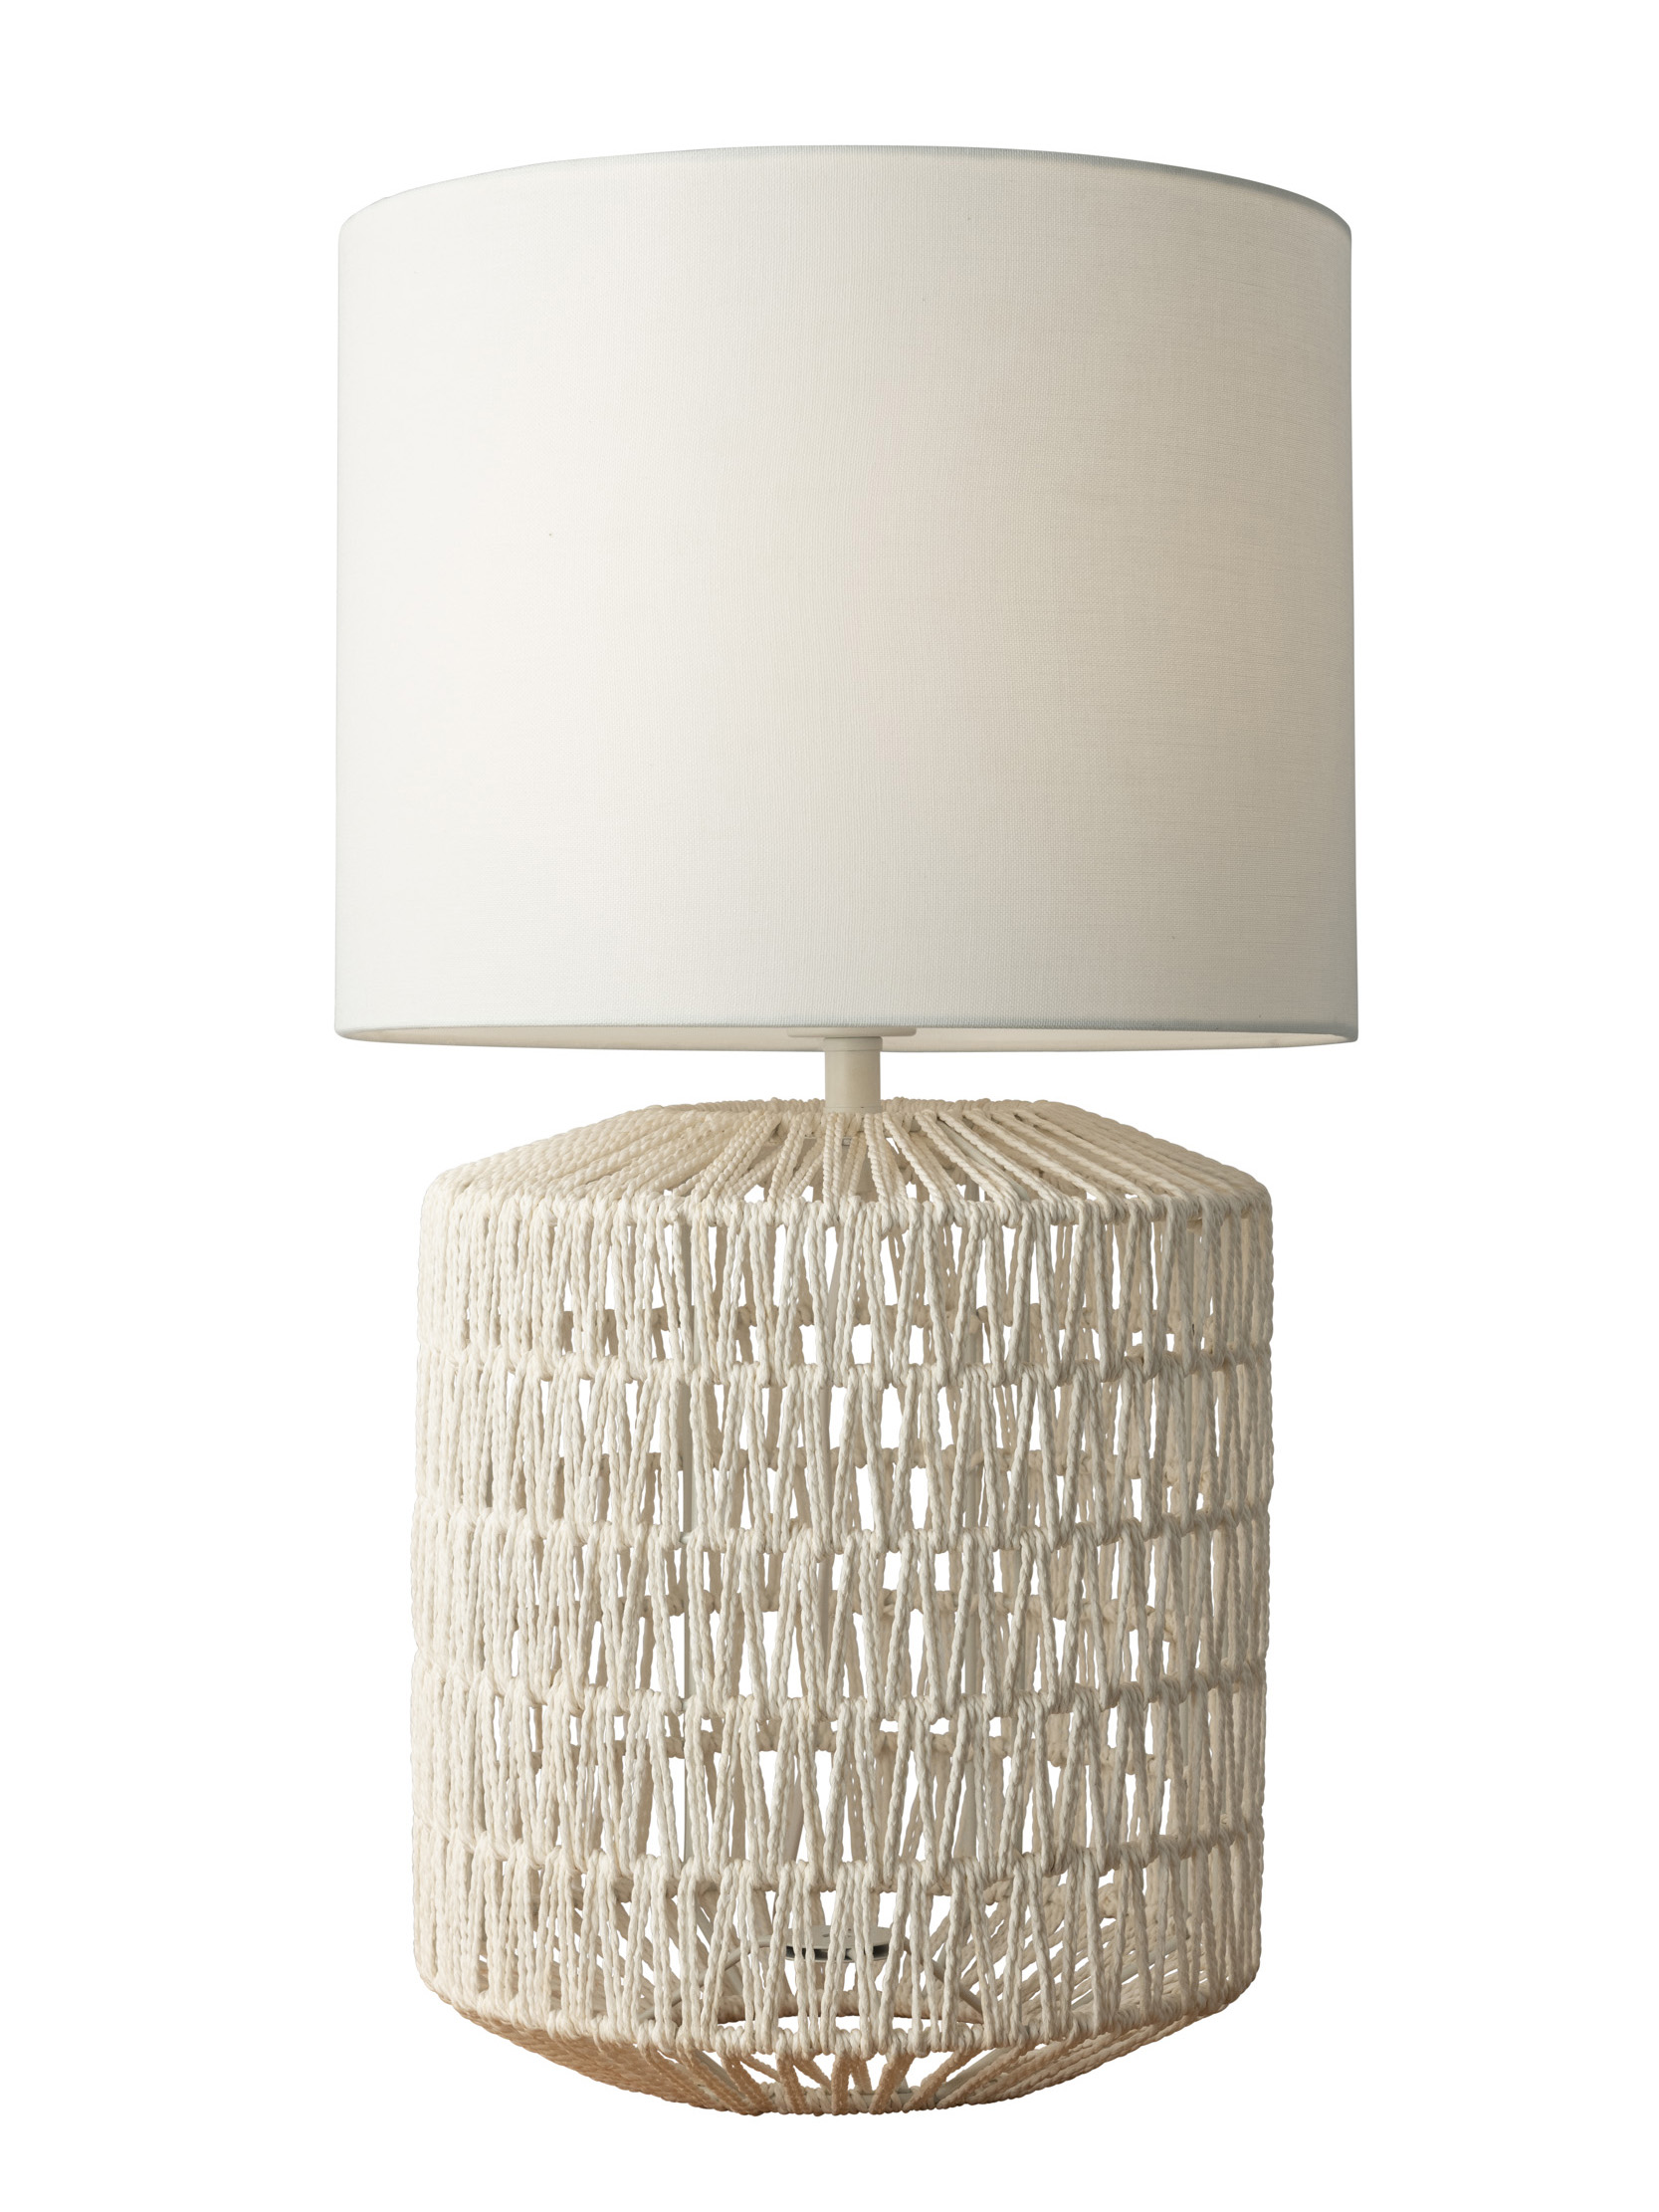 Lamp Cora White Weave H630mm